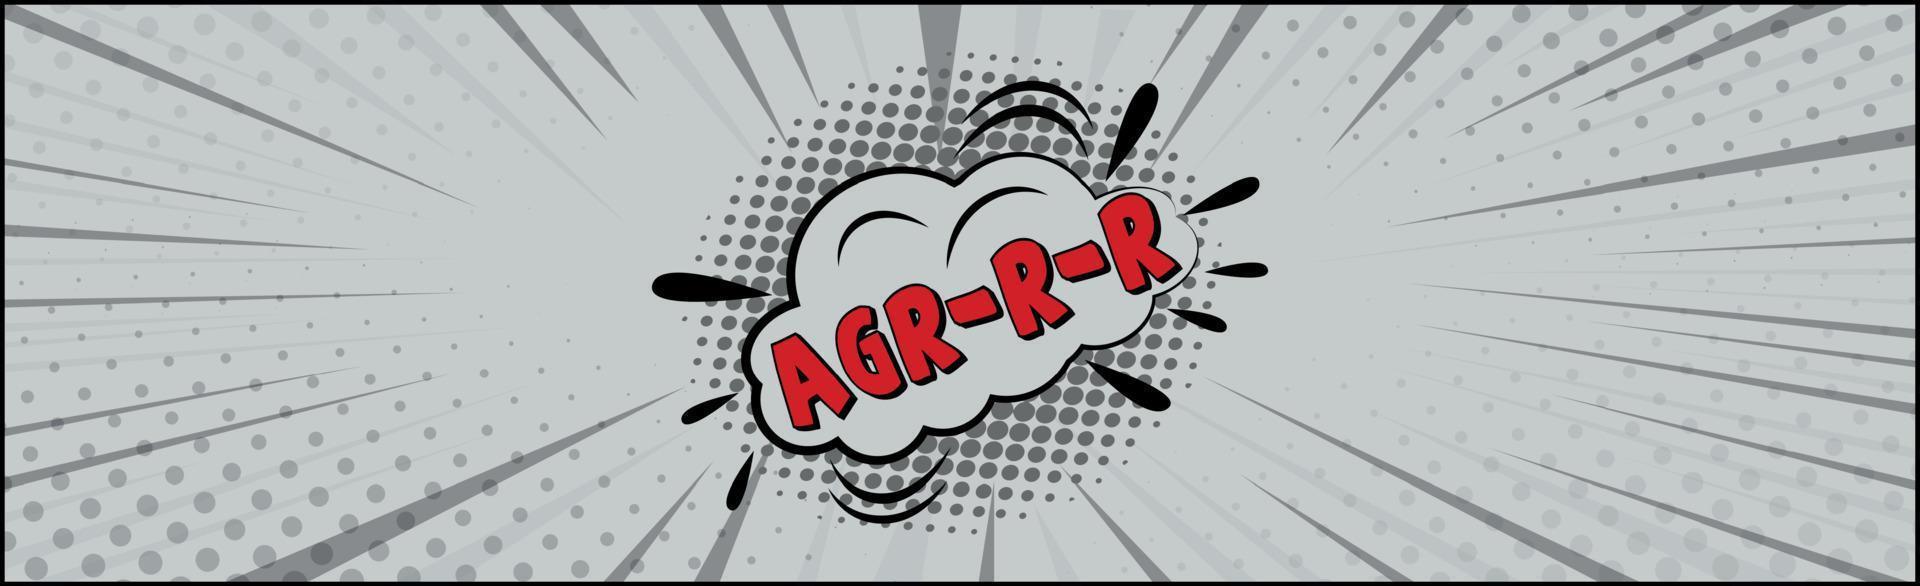 Comic lettering AGR-R-R on white background - Vector